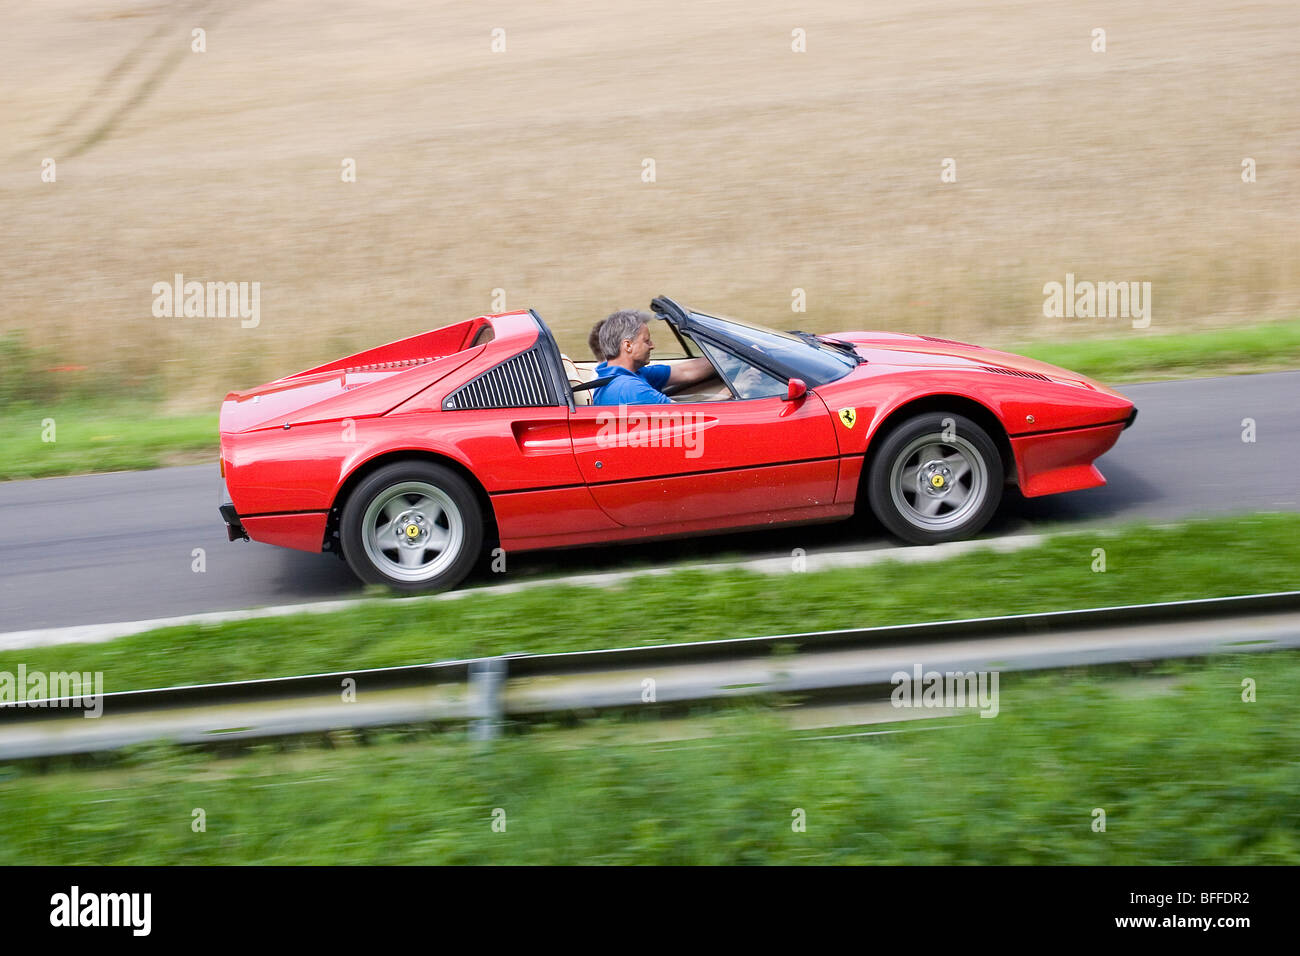 Red Ferrari 308 GTS classic Italian sports car Stock Photo